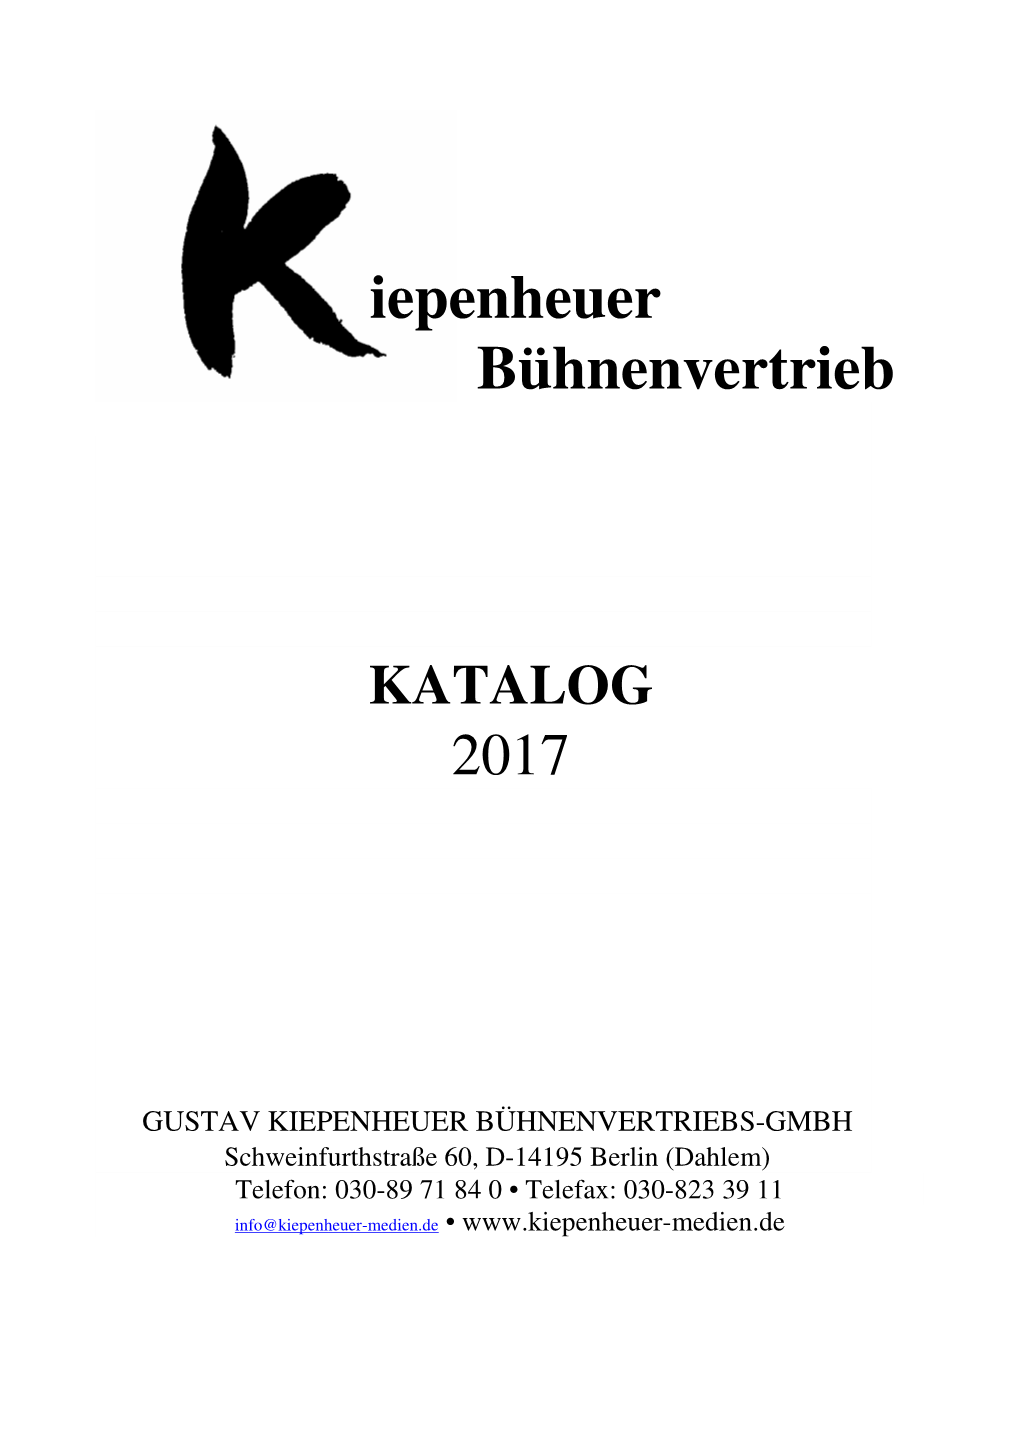 KIEPENHEUER-Katalog 2017